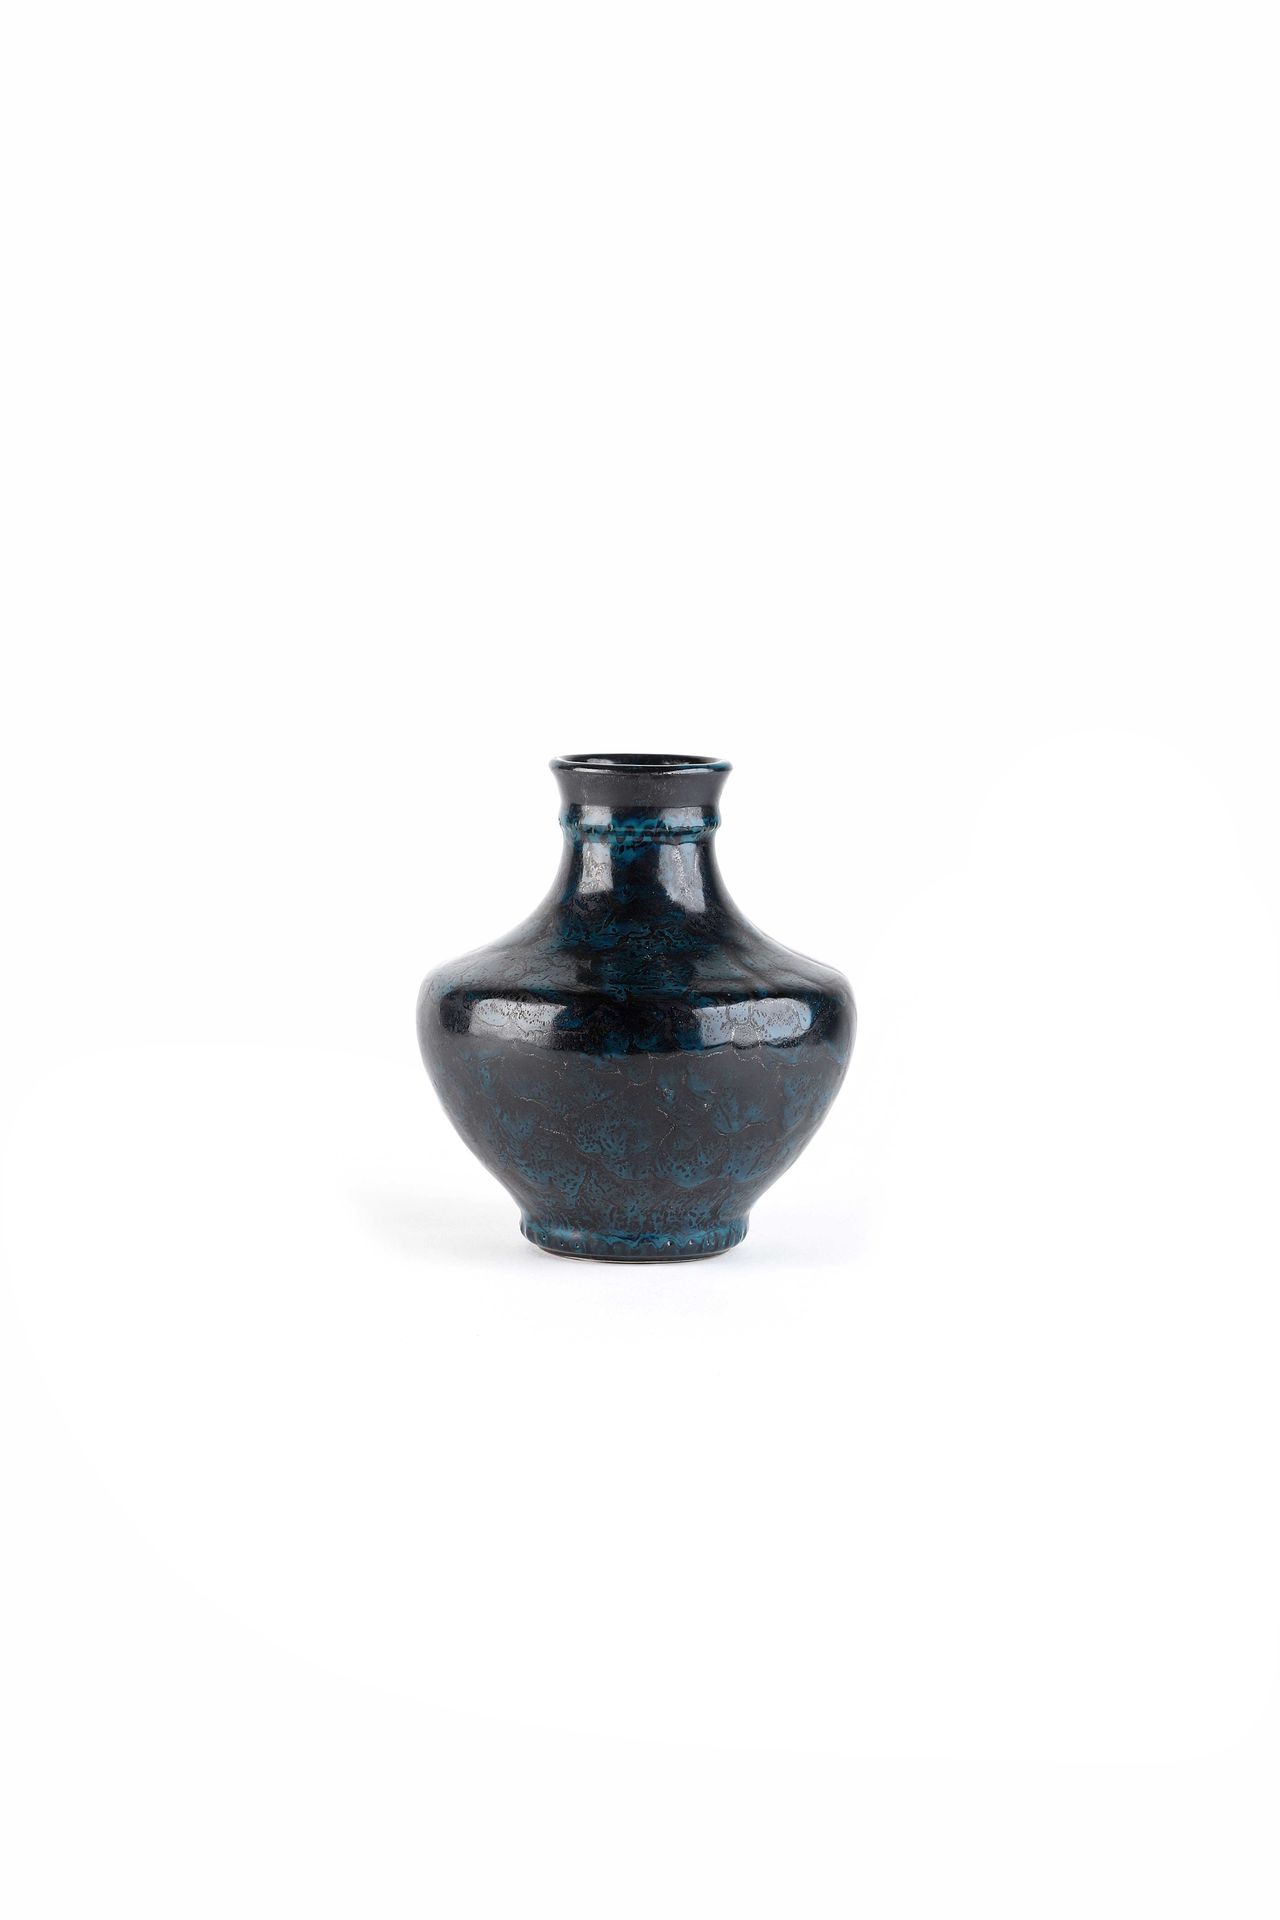 Null 埃米尔-德库尔 (1876-1953)

炻器花瓶，签名22.5 x 23.5厘米。约1932年

花瓶 釉面炻器 签名 8.85 x 9.25 in&hellip;